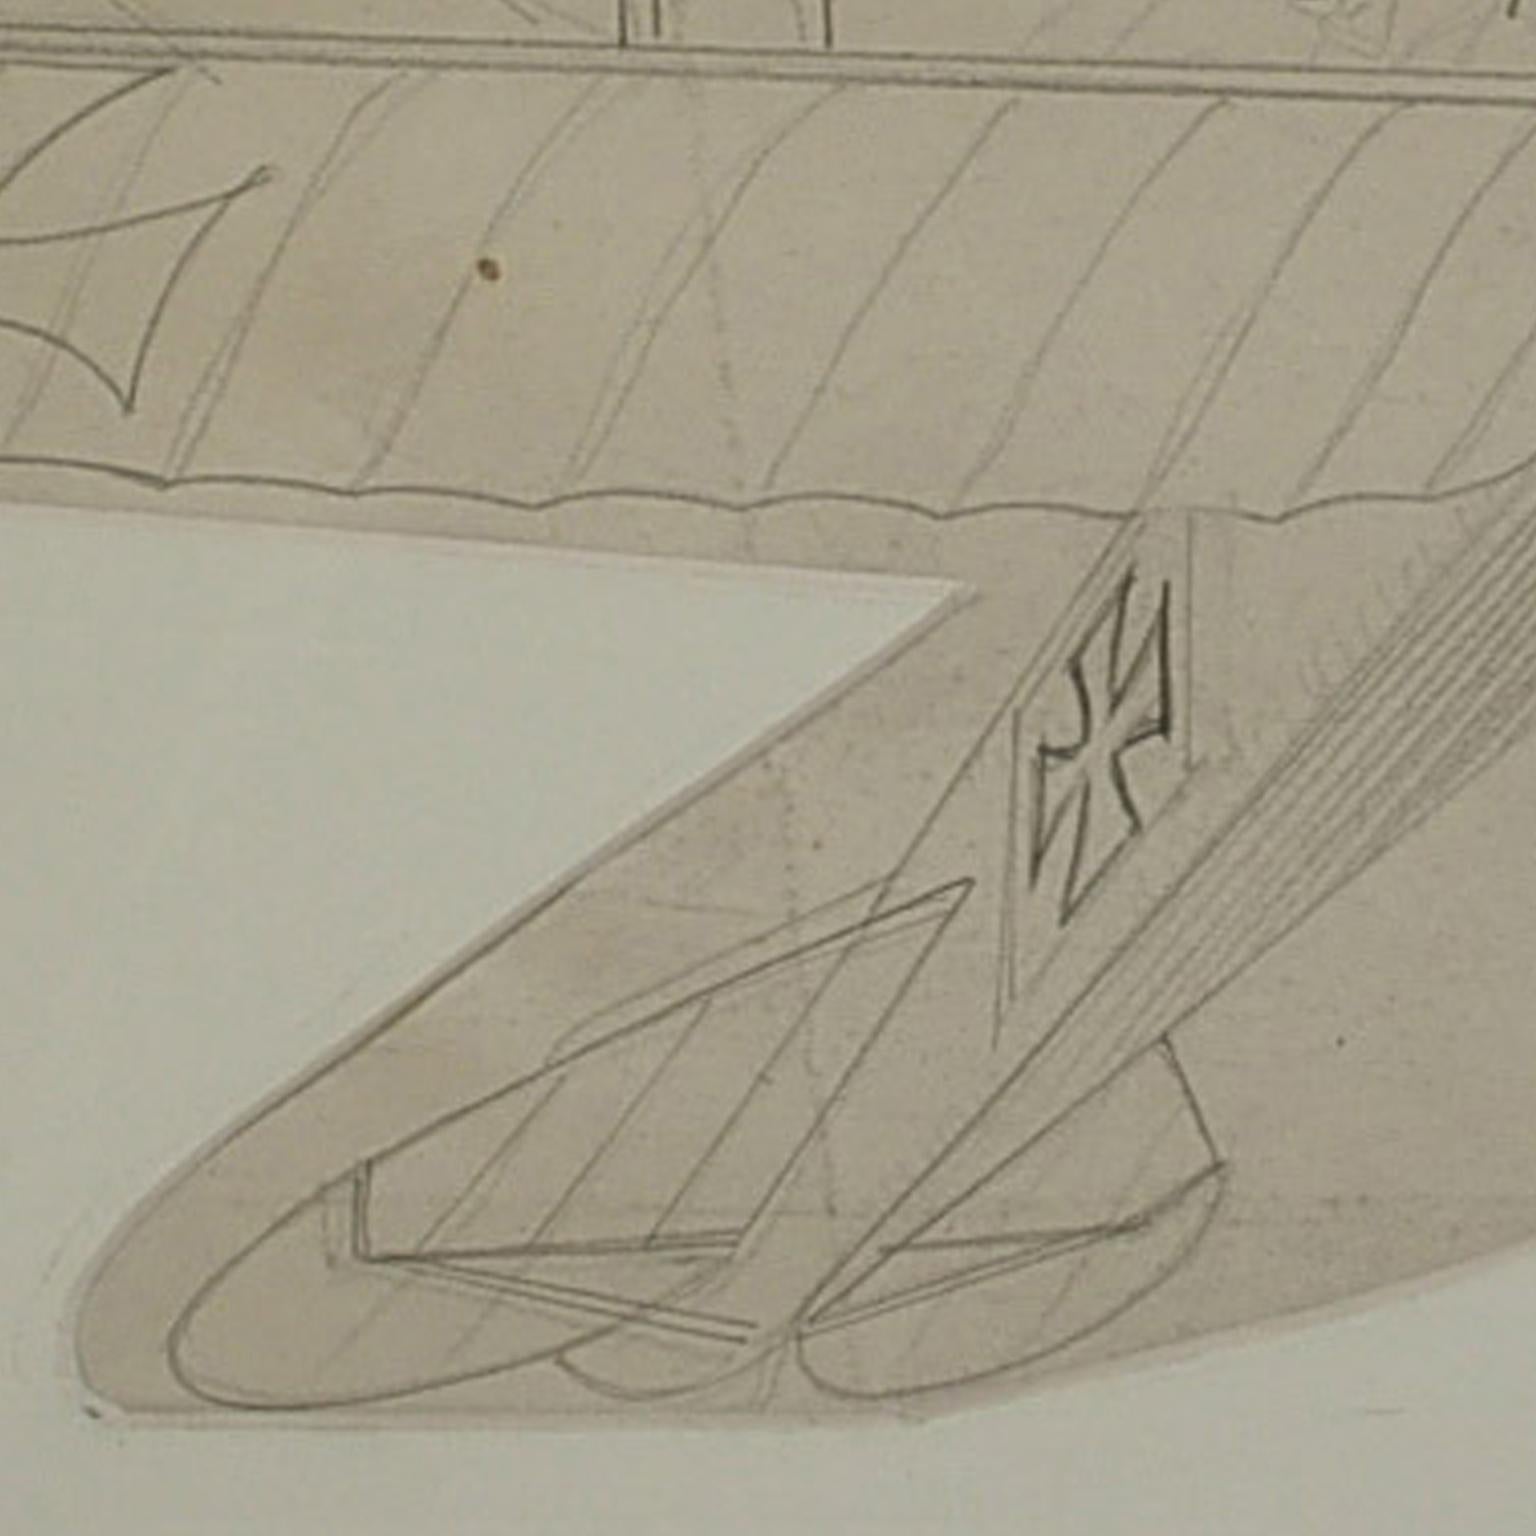 pencil ww1 plane drawing